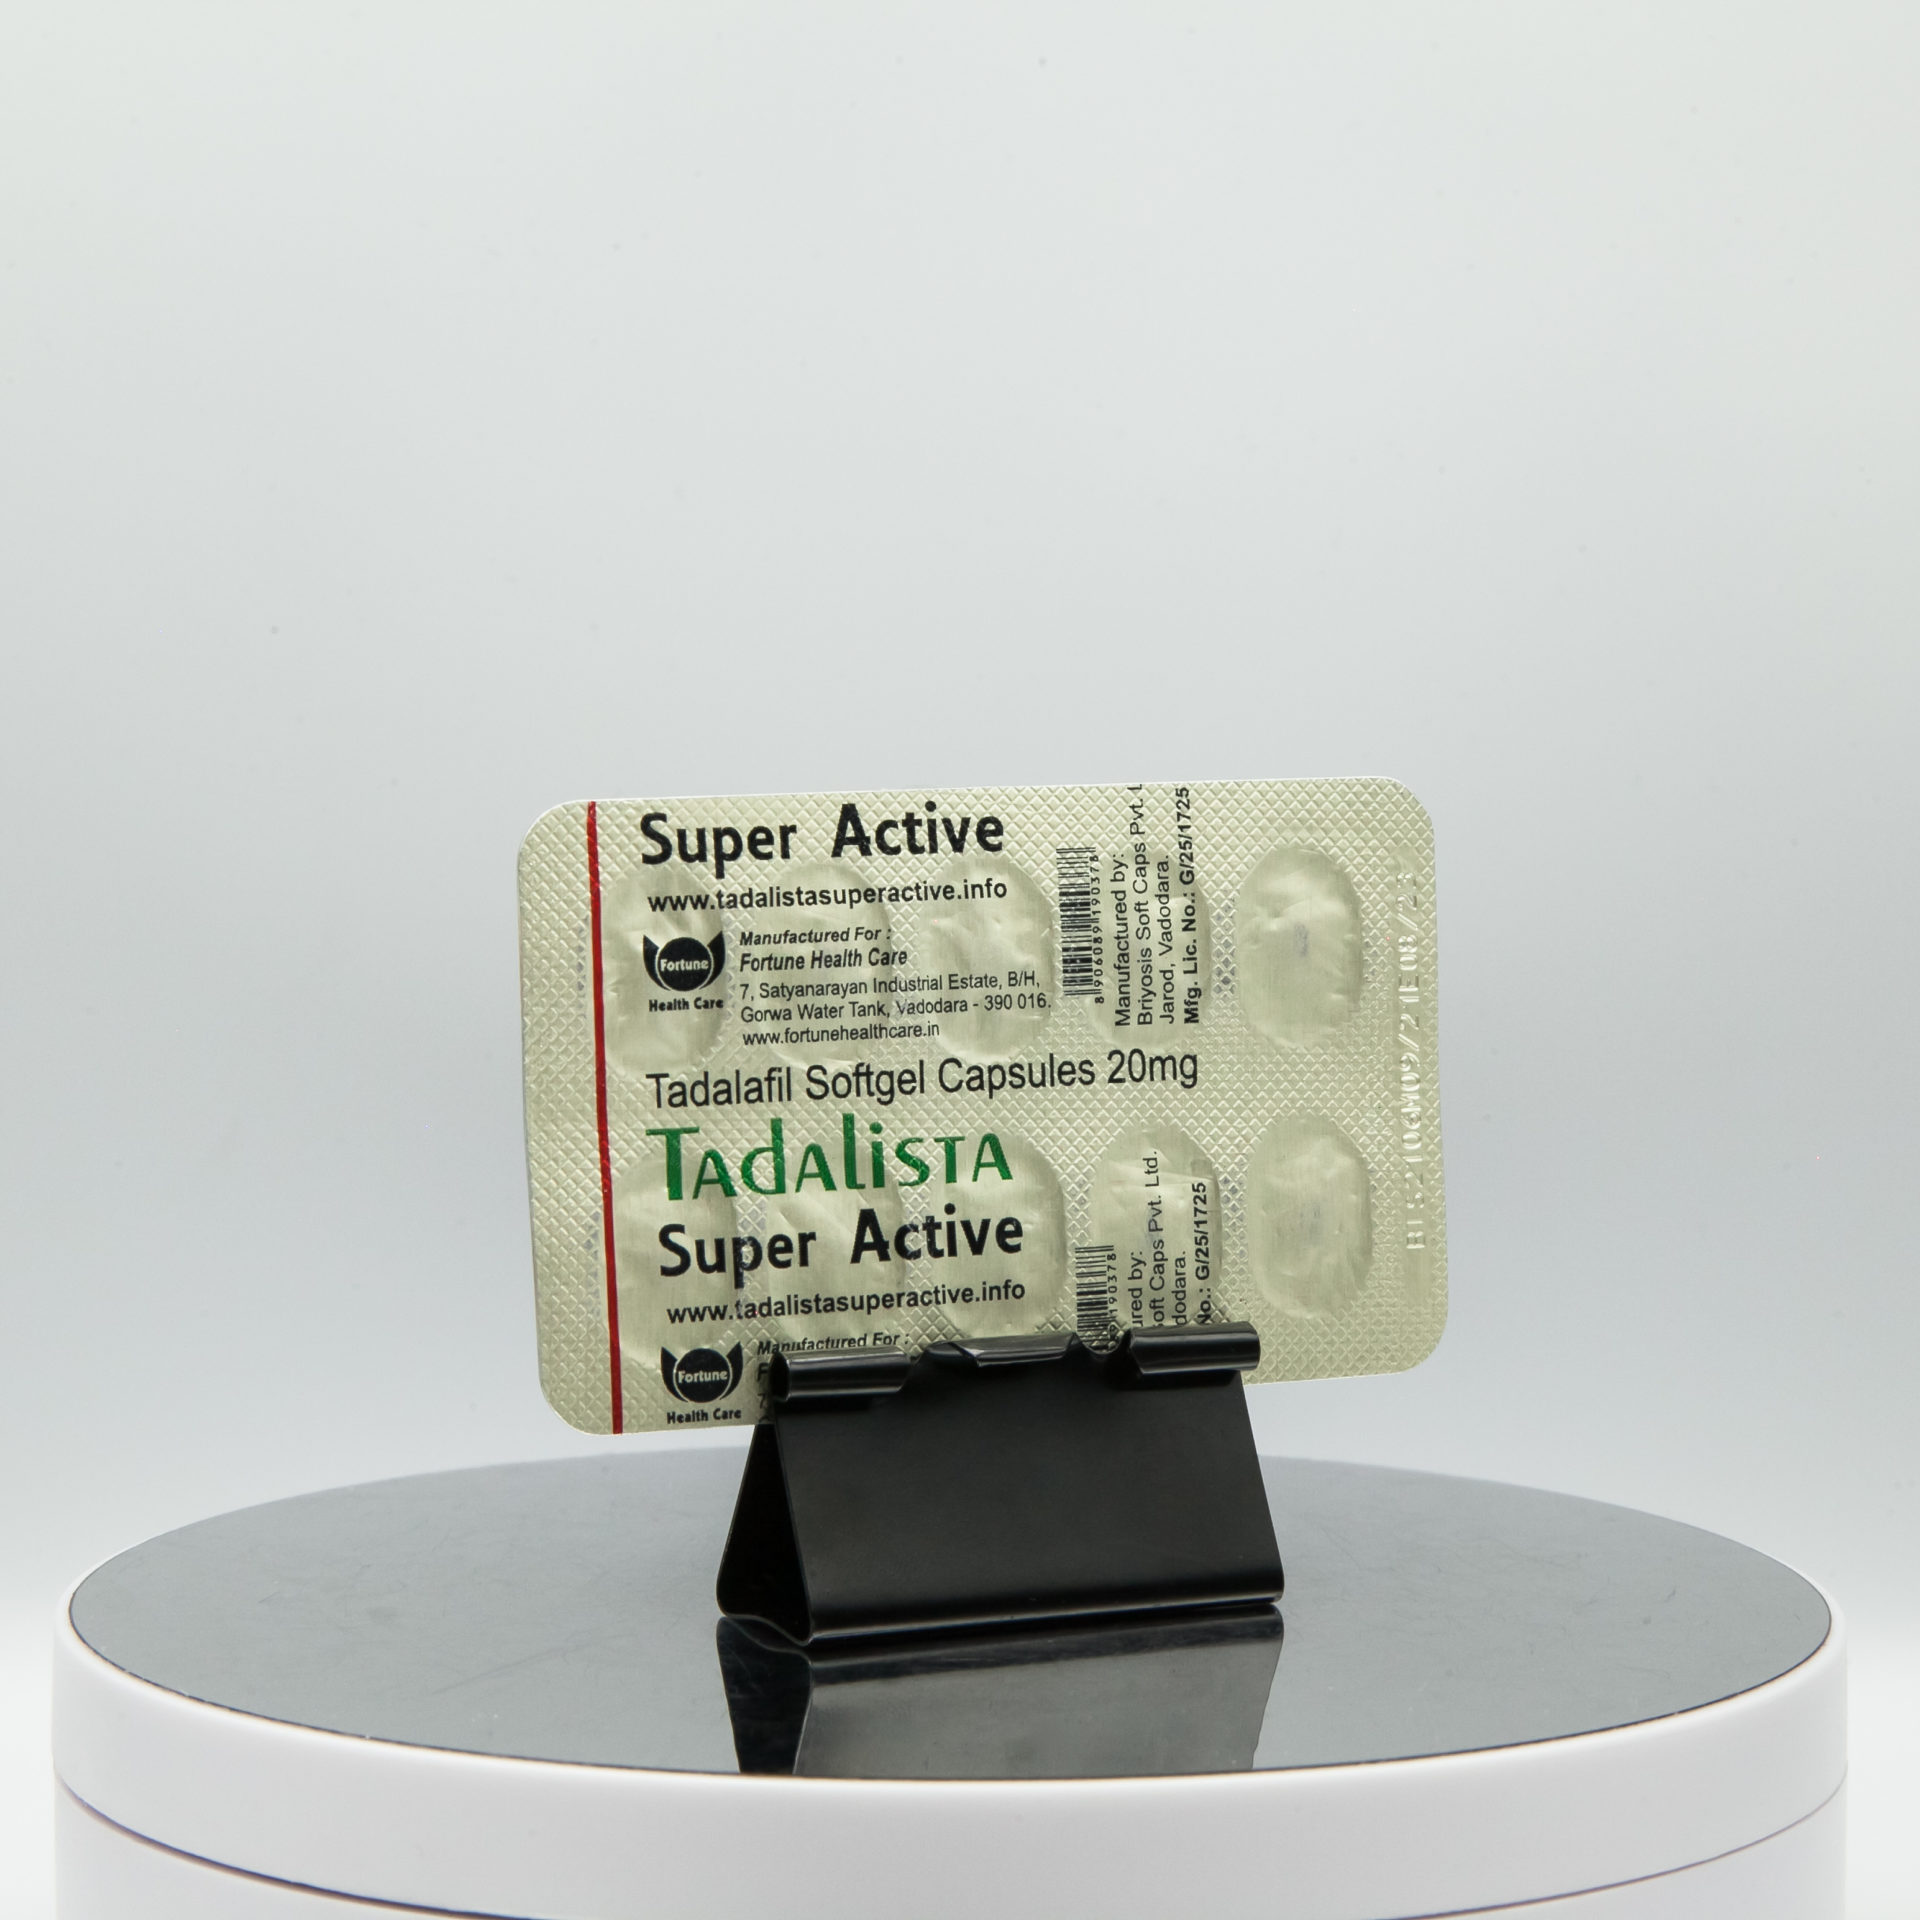 Tadalista Super Active 20 mg Fortune Health Care Tadalafil Citrate (Cialis Generic) 3